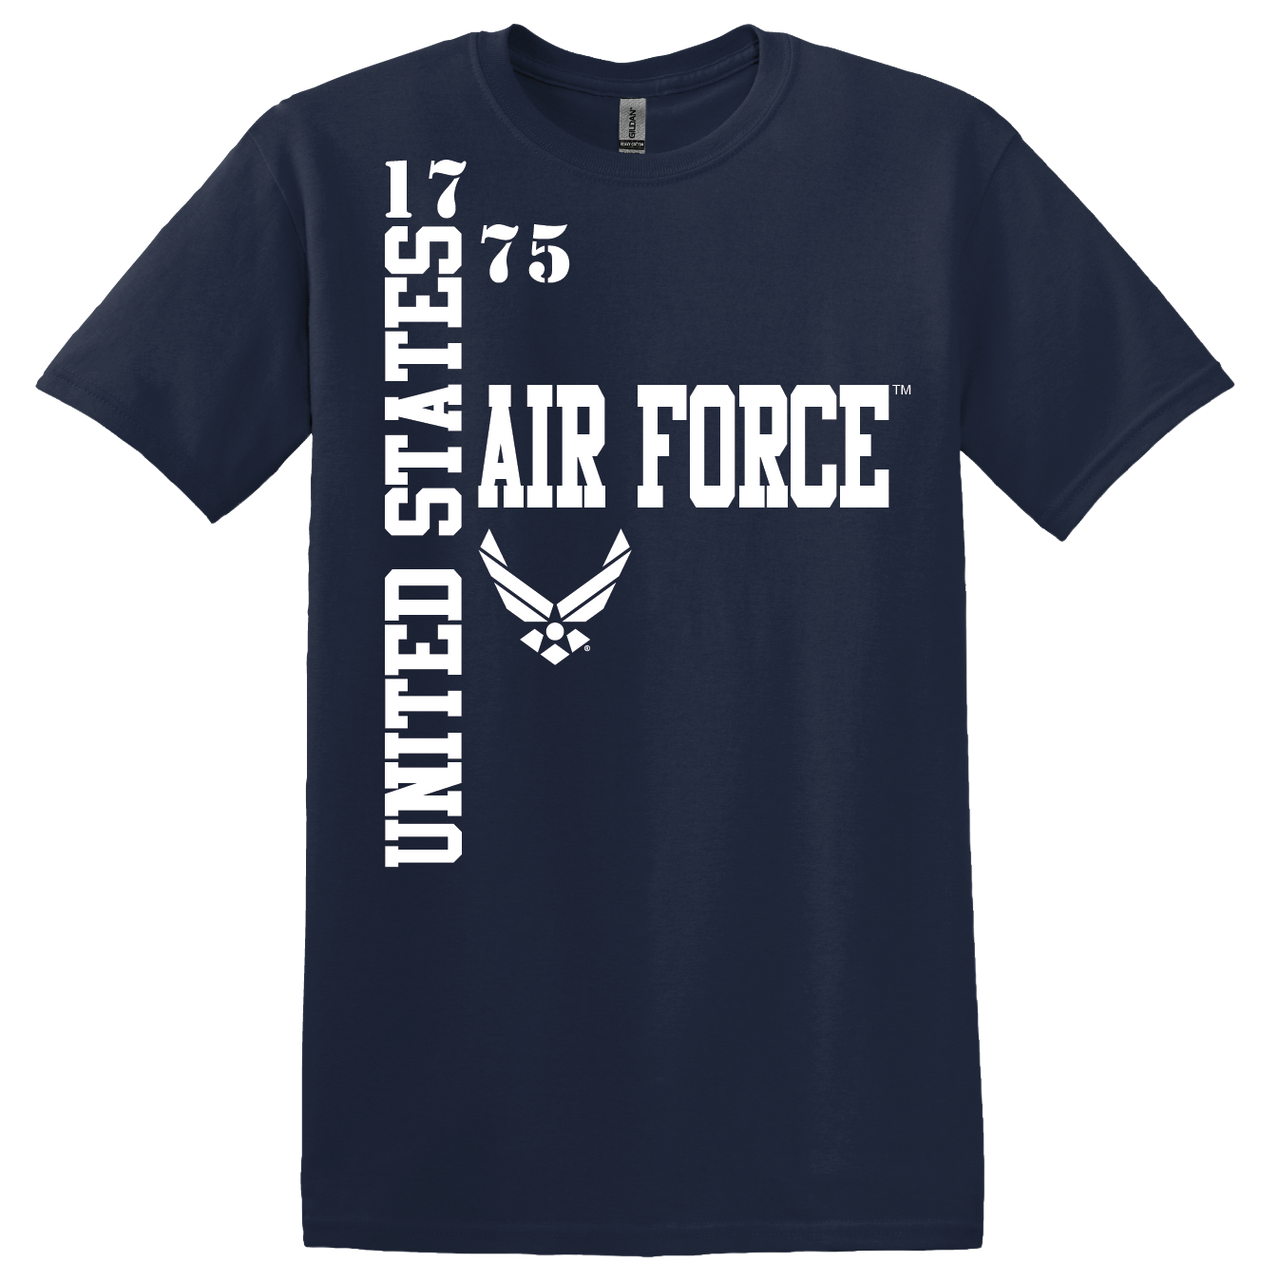 U.S. Air Force Symbol 1775 on Unisex Short Sleeve T-Shirt